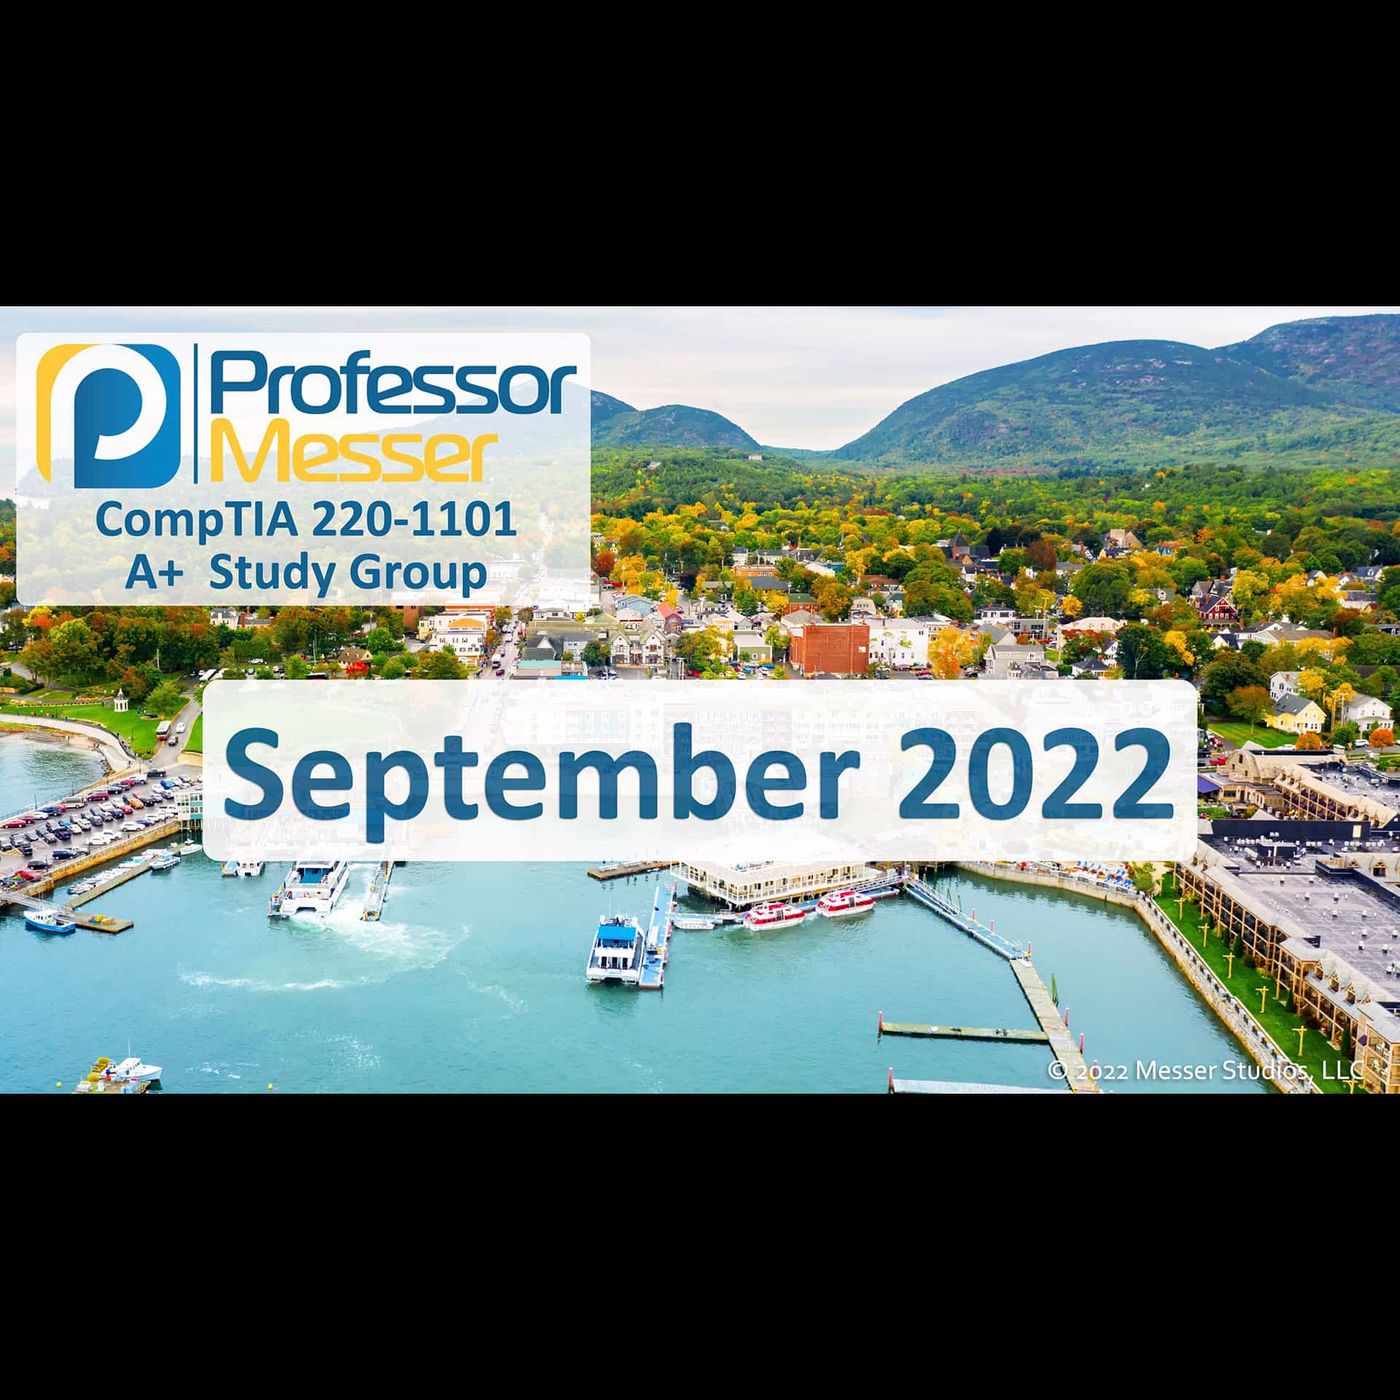 Professor Messer's CompTIA 220-1101 A+ Study Group - September 2022